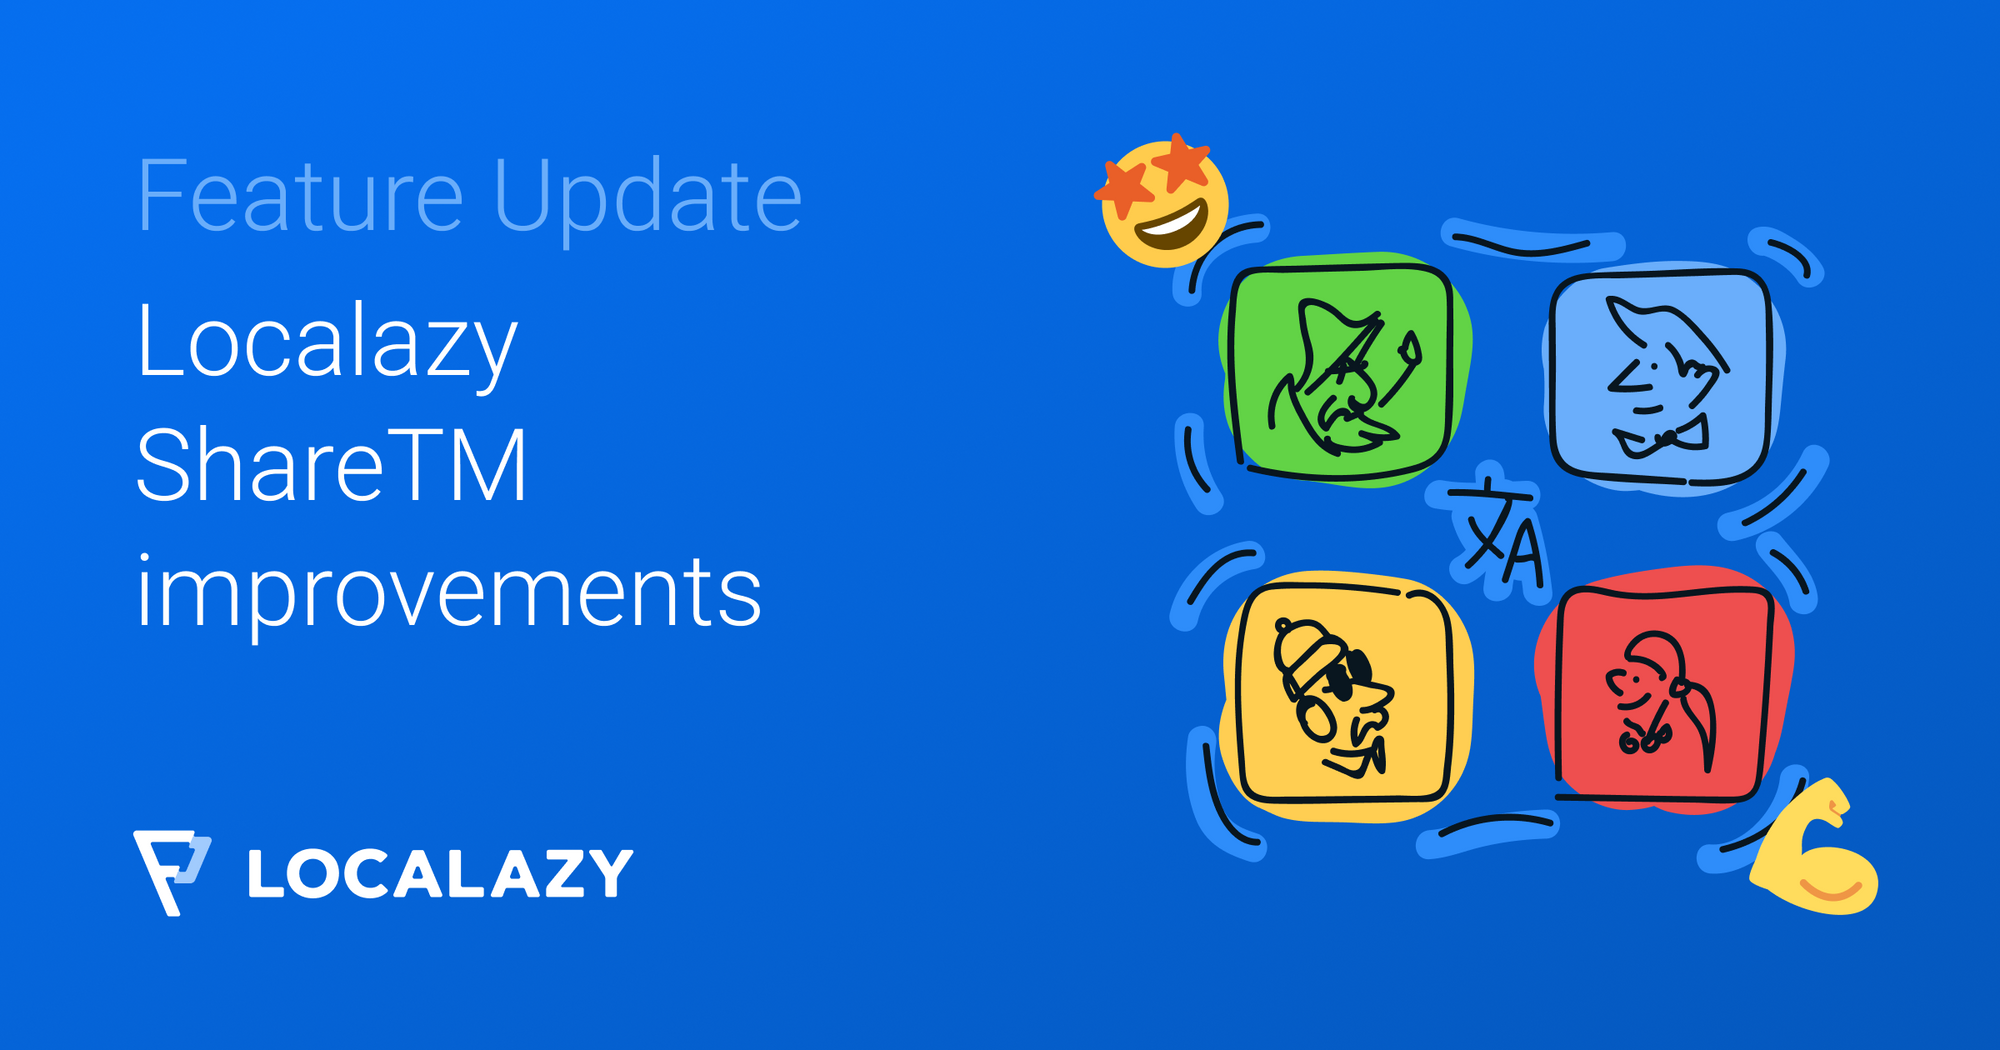 Feature Update: Localazy ShareTM improvements